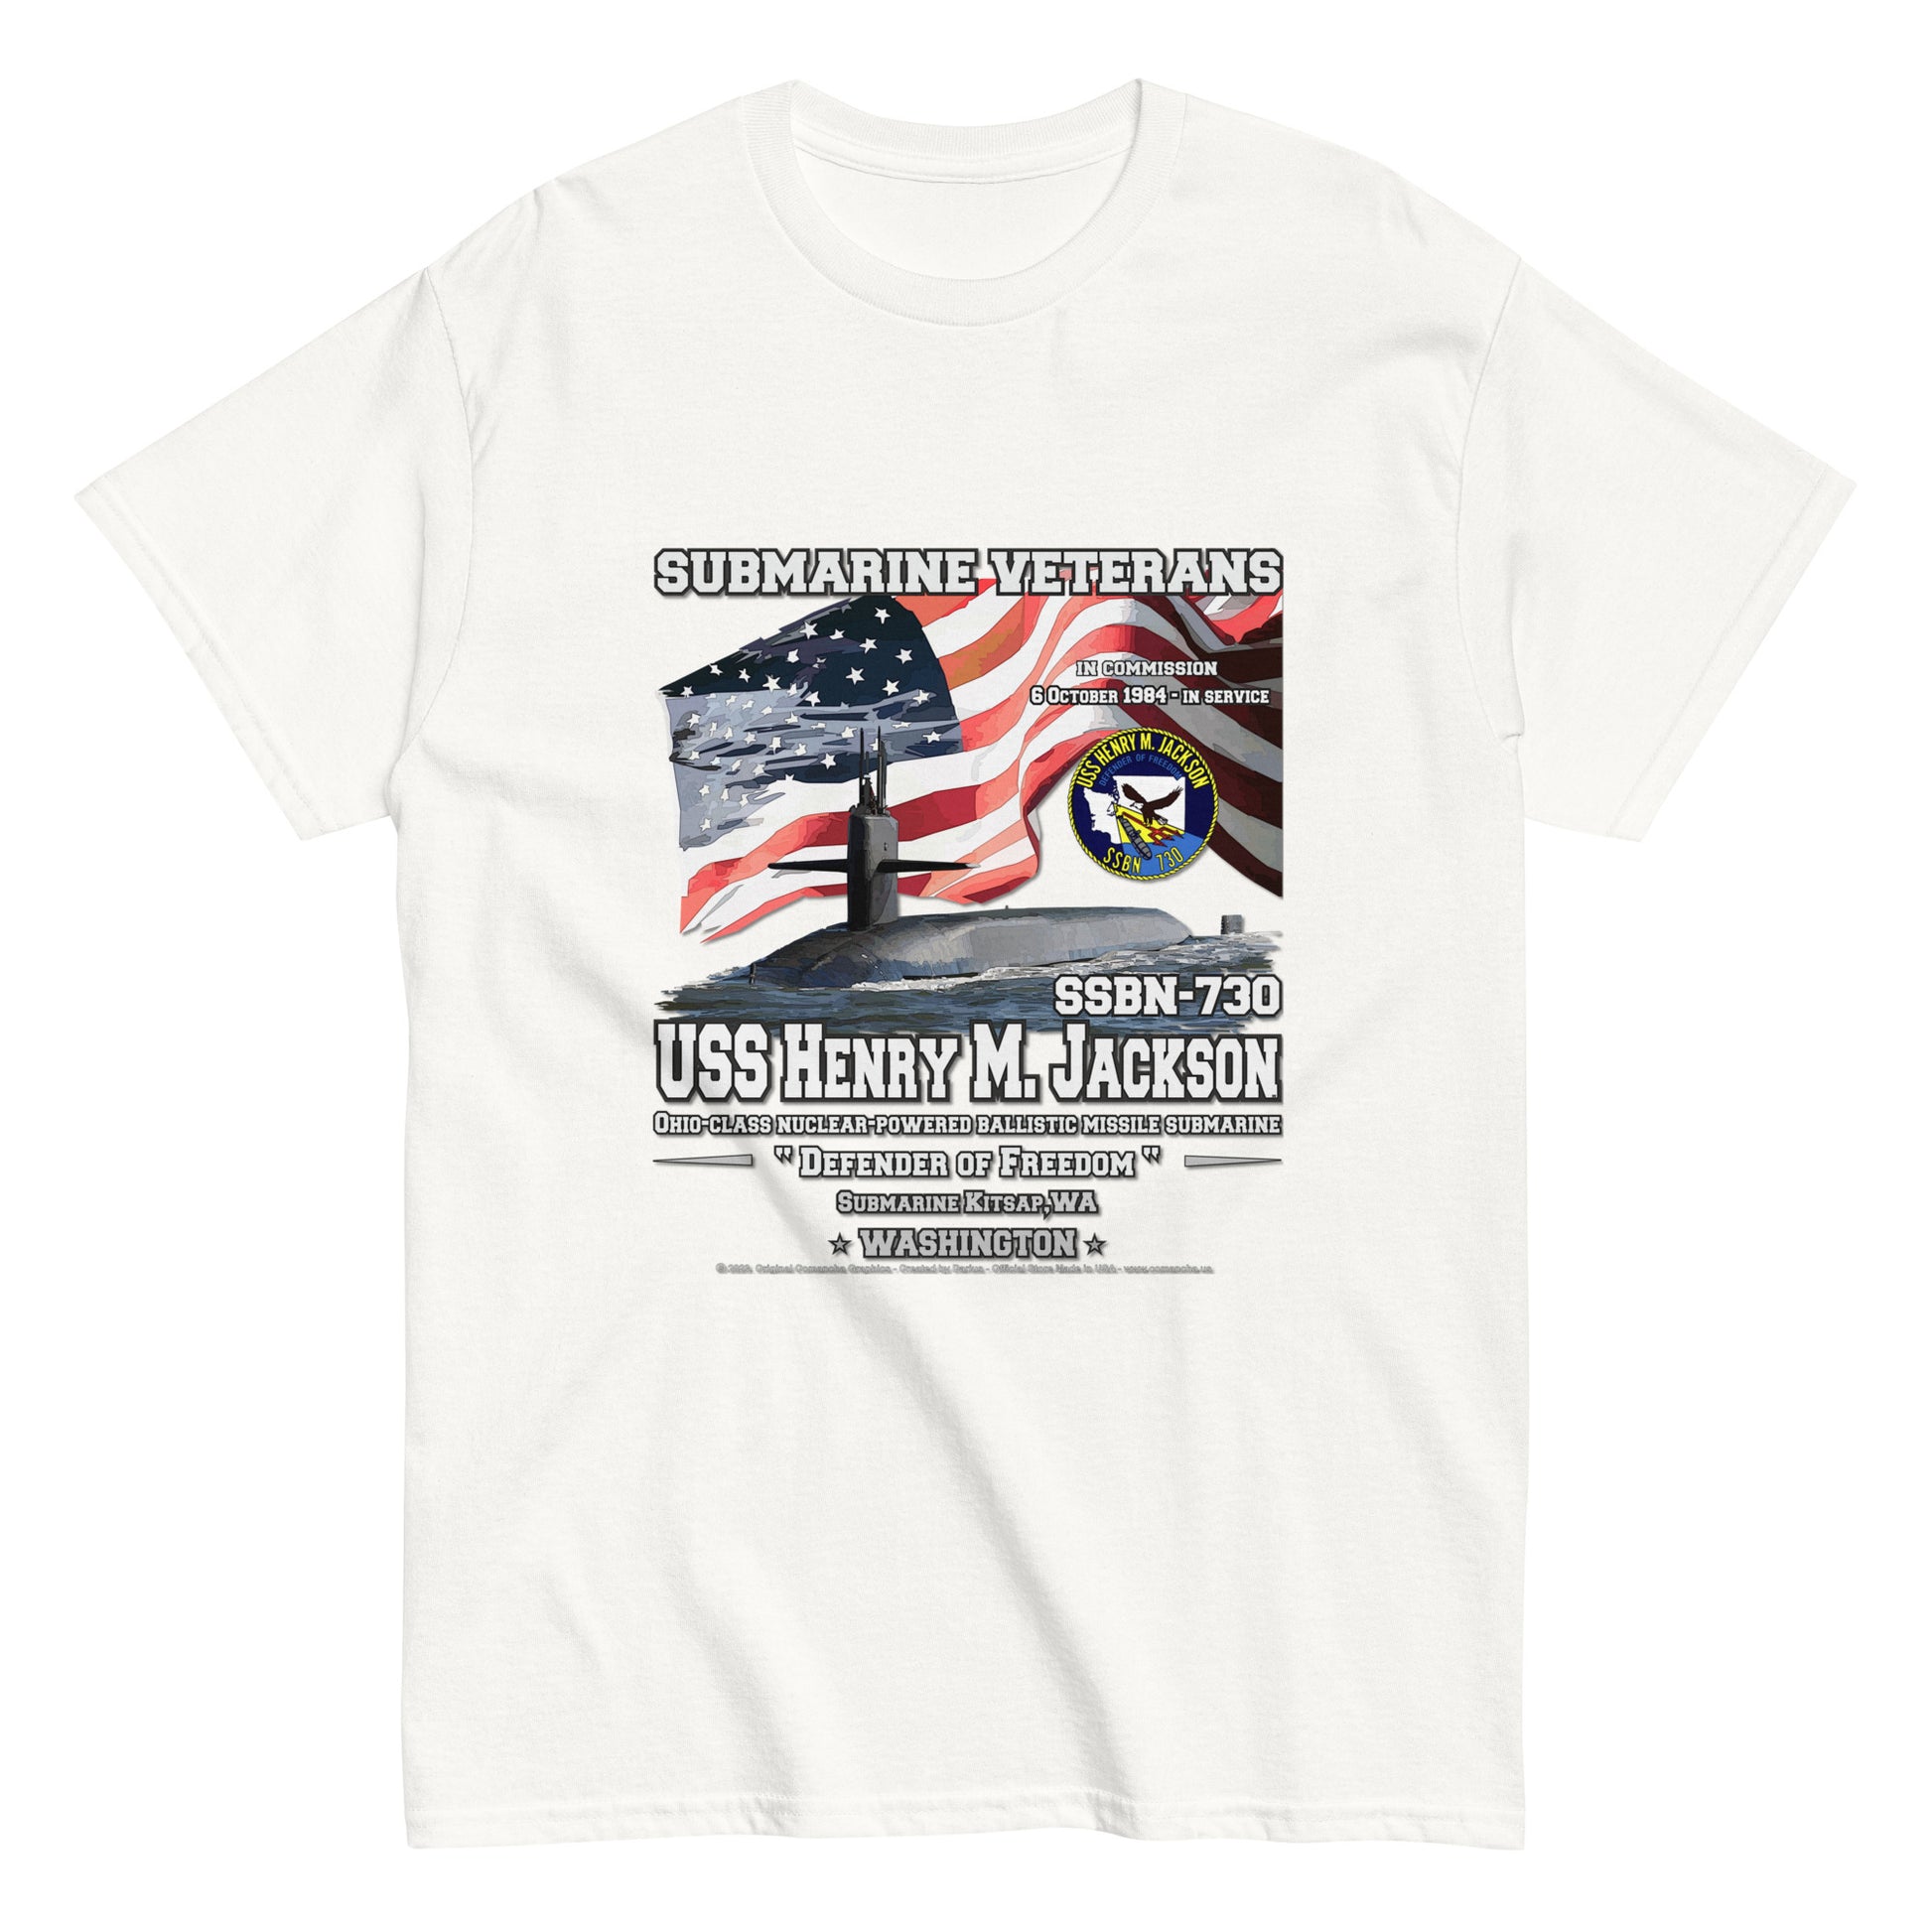 USS HENRY JACKSON SSBN-730 Submarine Veterans Classic T-Shirt, Comancha Navy T-shirts, USS HENRY JACKSON SSBN-730 t-shirt, Submarine Veterans Classic T-Shirt, Comancha Navy T-shirts,